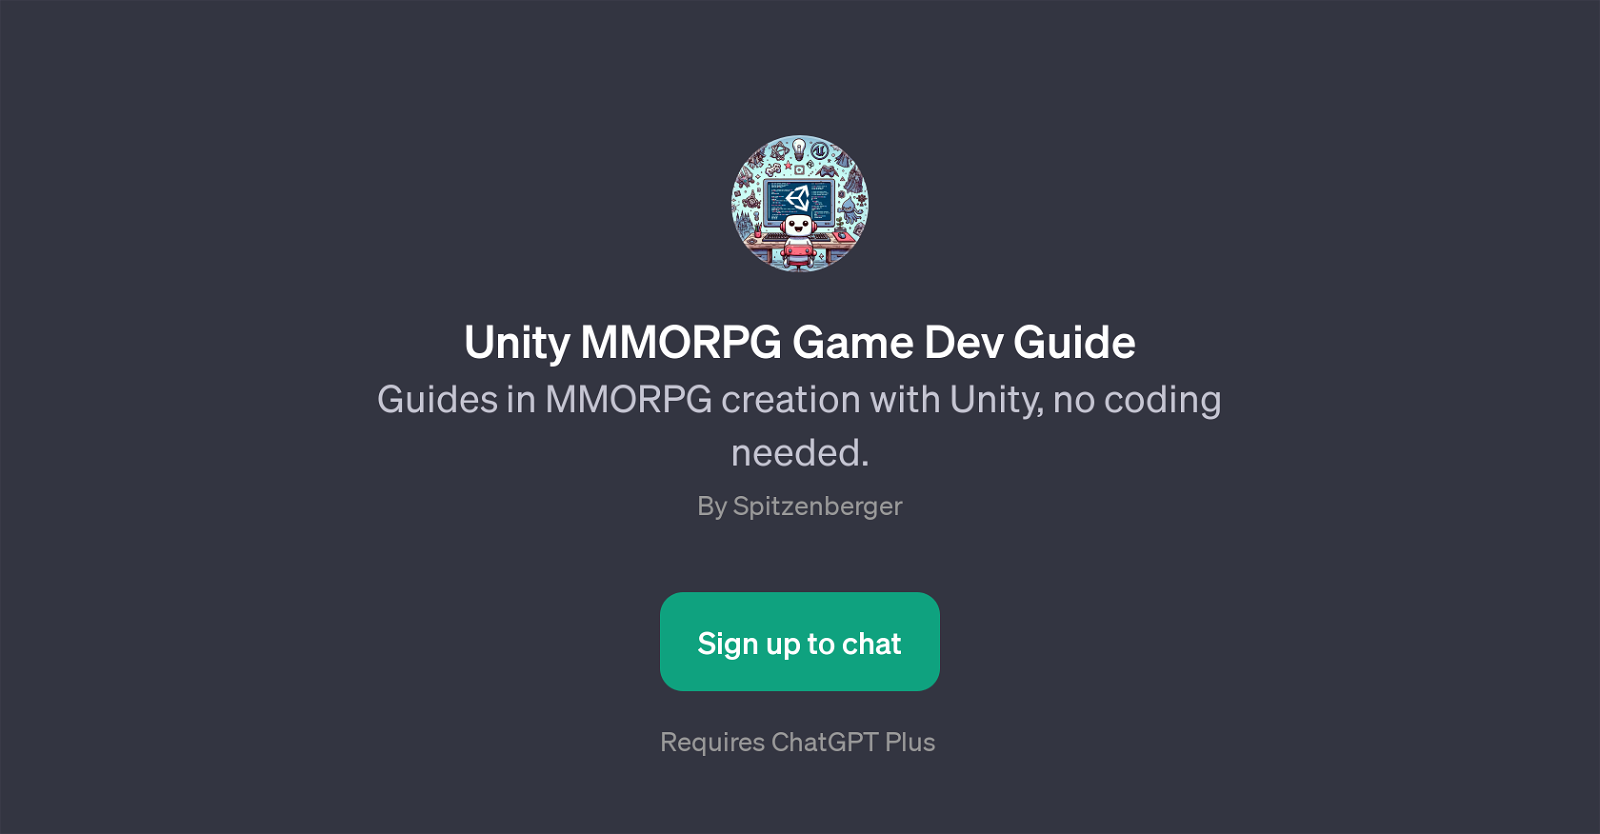 Unity MMORPG Game Dev Guide website